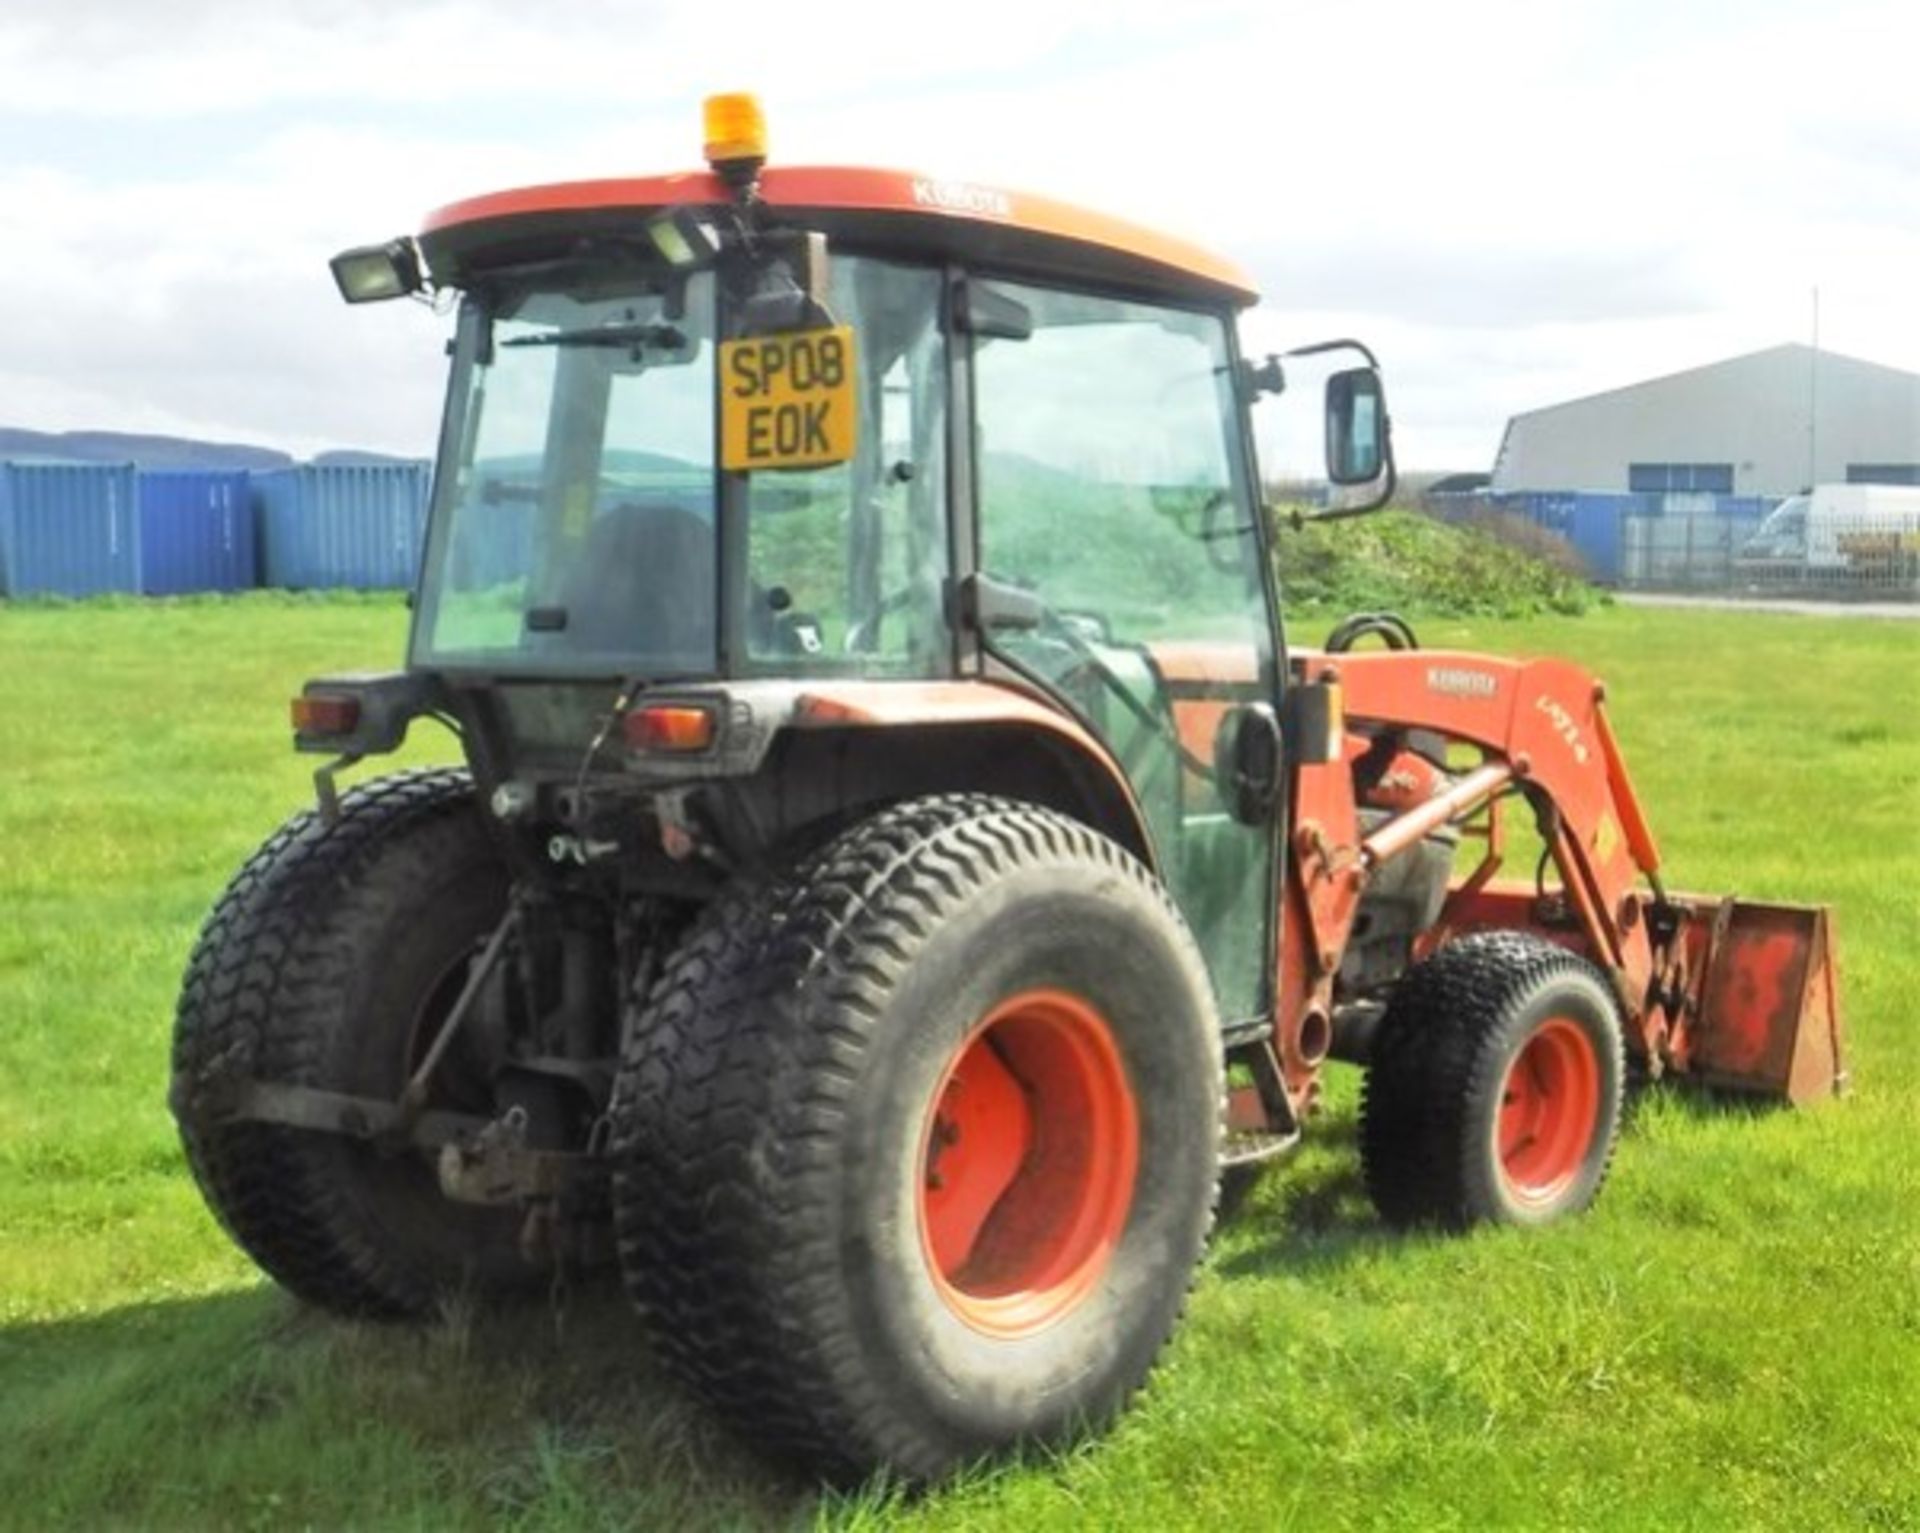 KUBOTA L4240 tractor c/w loader model LA714. Reg No SP08 EOK, s/n 3029671535. 3285 hrs (not verified - Image 13 of 17